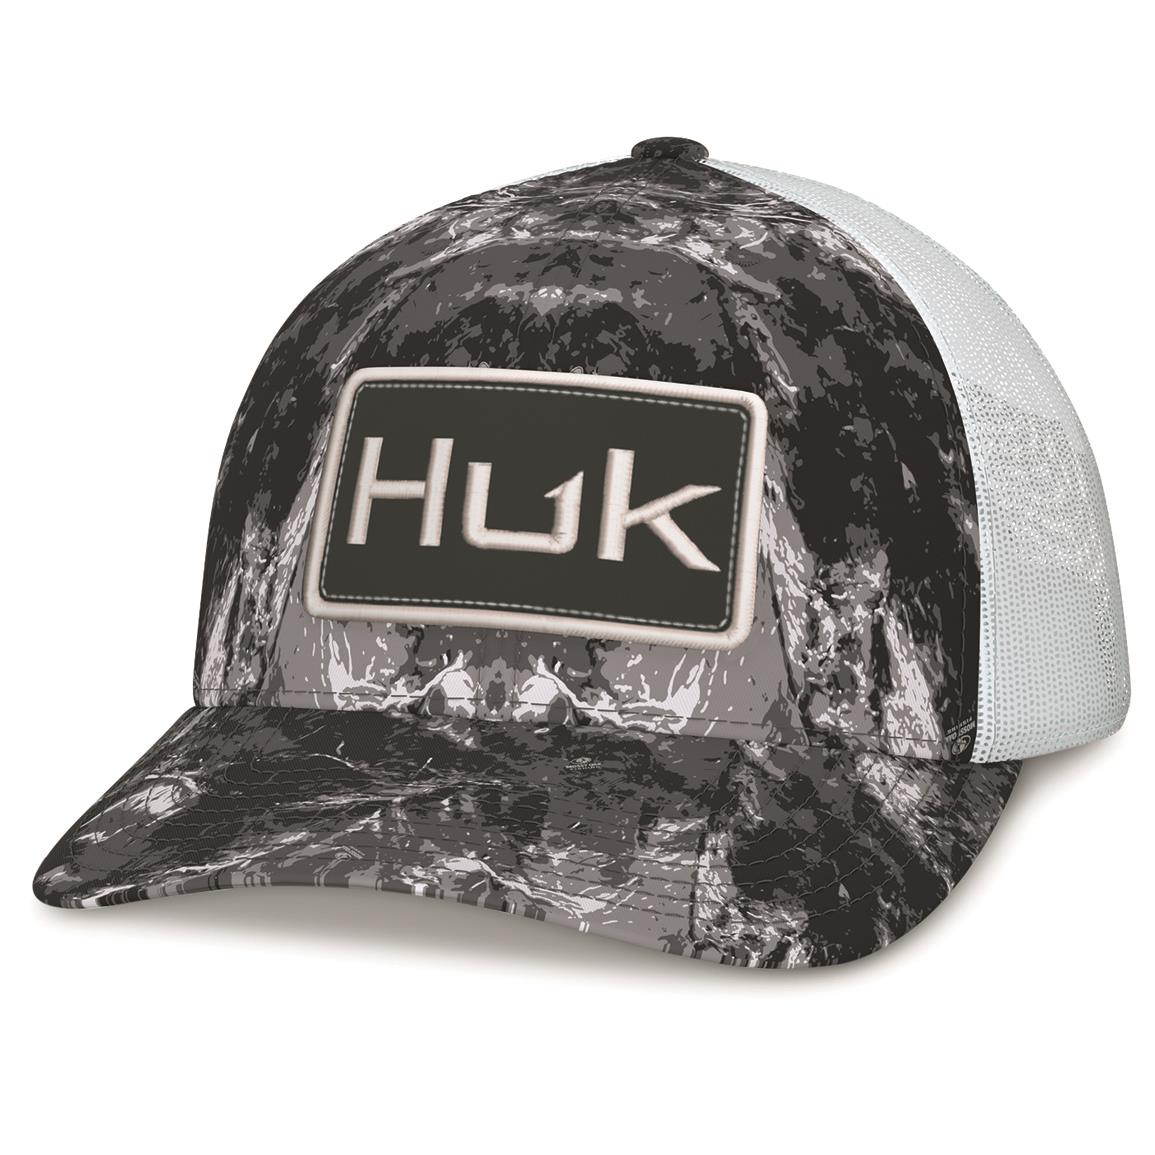 Huk Mossy Oak Stormwater Trucker Hat - 736463, Hats & Caps at Sportsman's  Guide